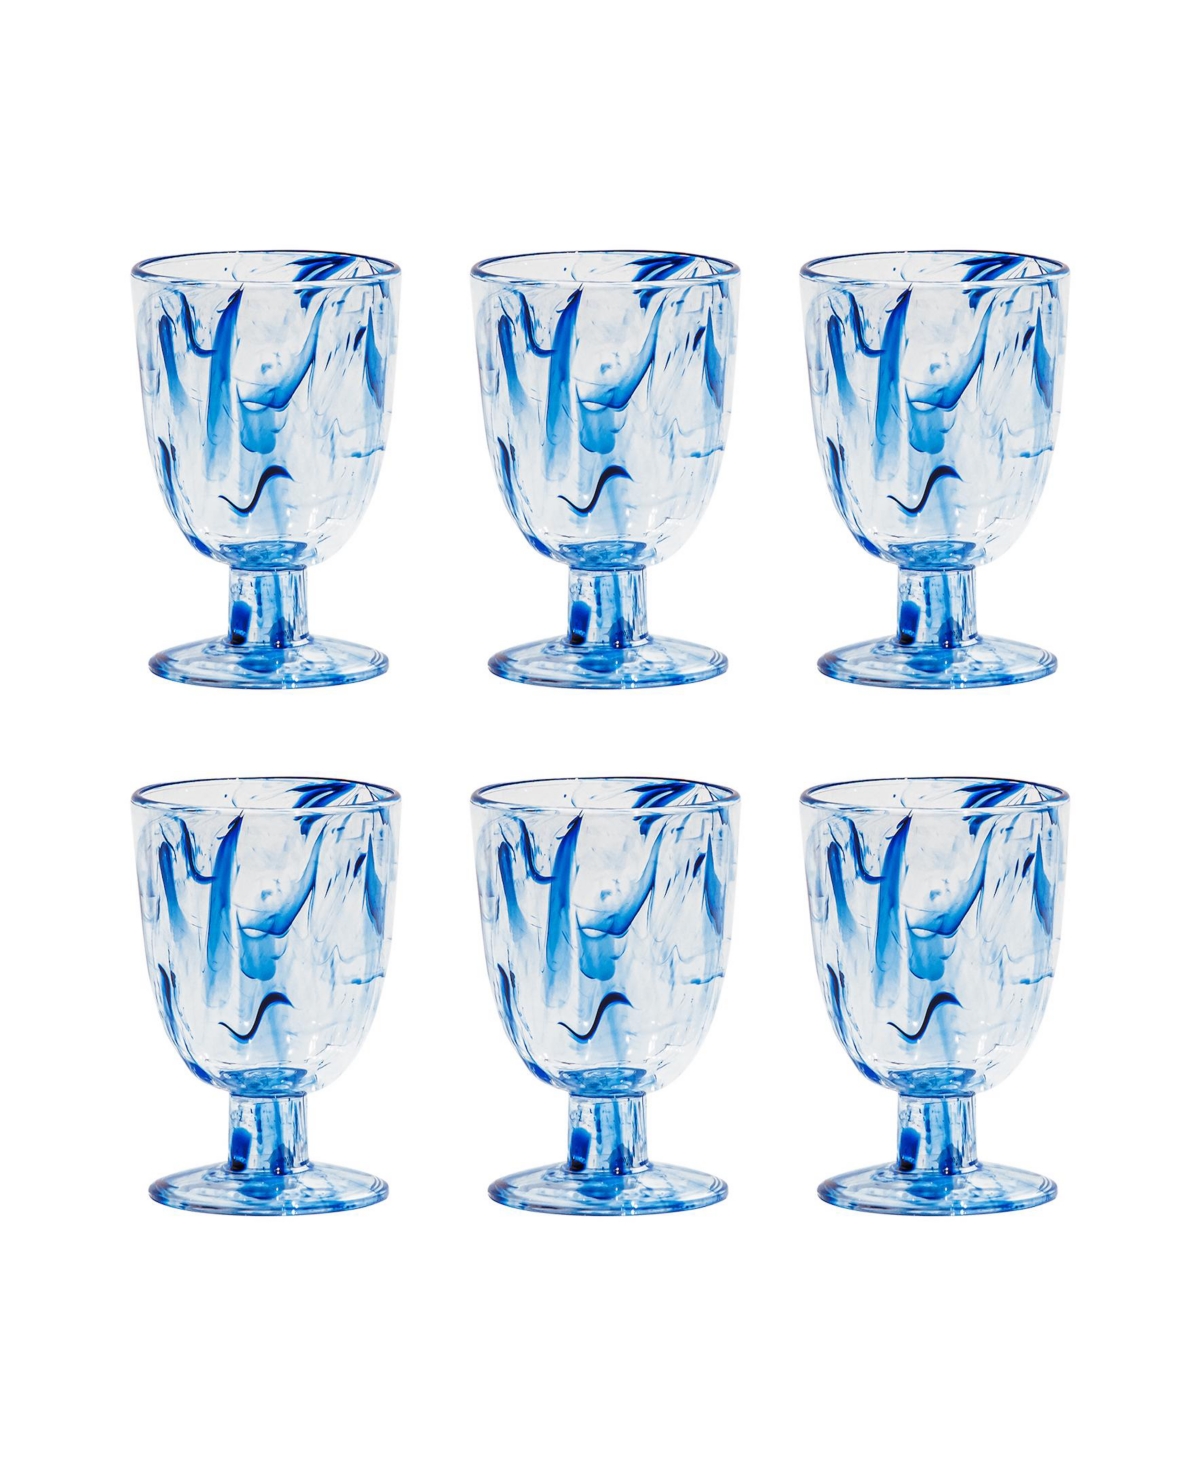 Tarhong Aegean Swirl 6-piece Premium Acrylic Goblet Glass Set, 14 oz In Blue